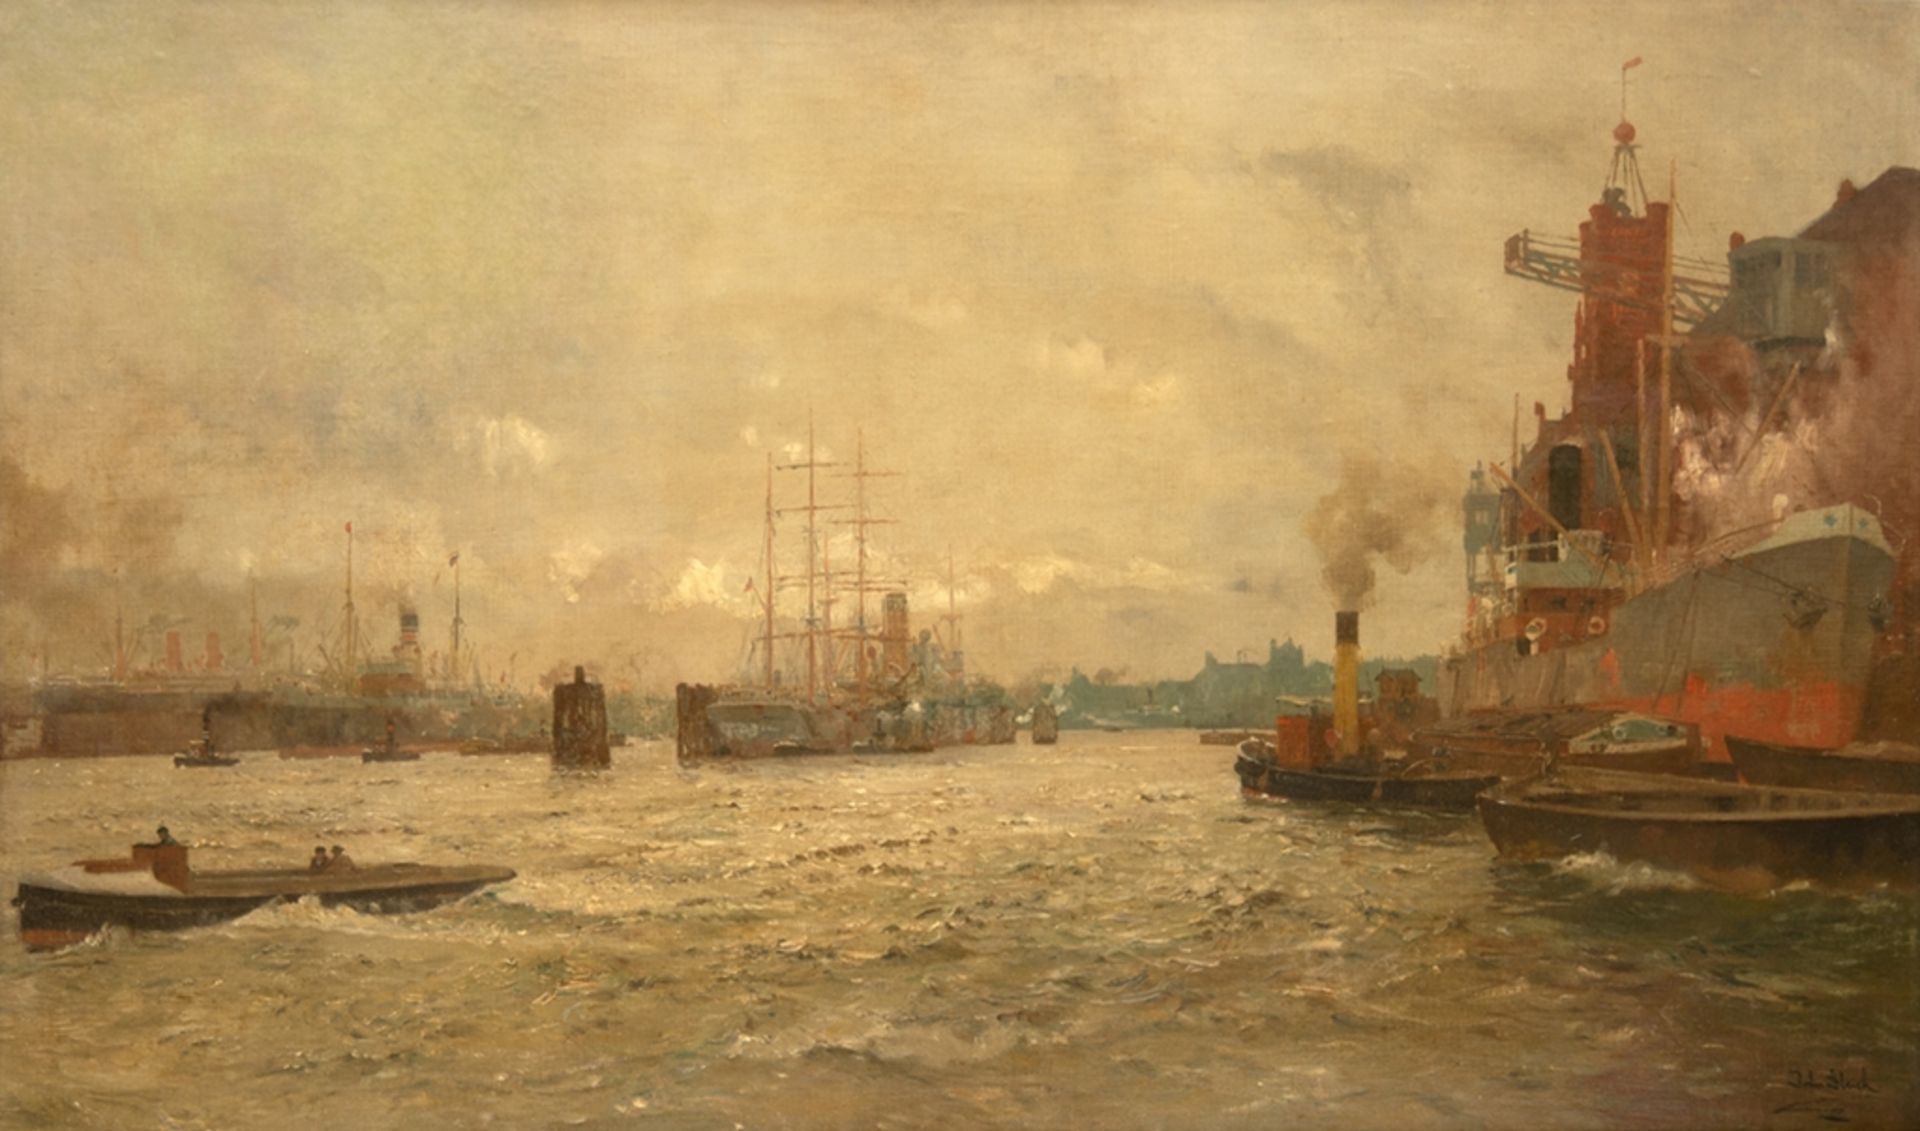 Gleich, John (1879 Memel-nach 1927) "Im Hamburger Hafen", Öl/ Lw., doubliert, sign. u.r., 69x108 cm